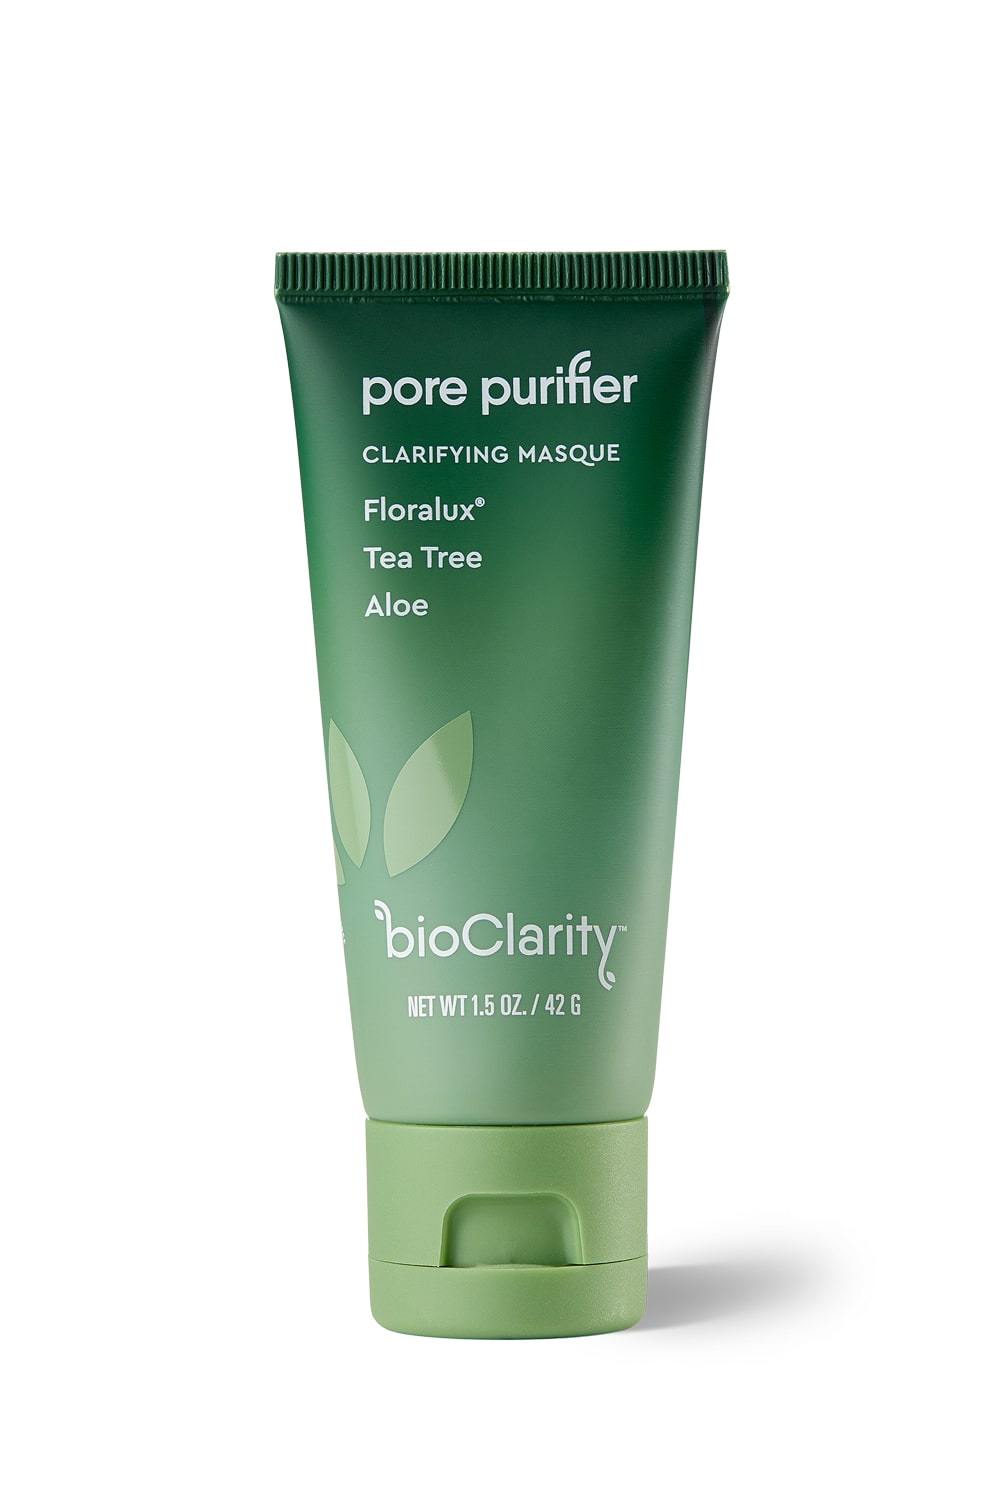 Shapermint bioClarity 1.5 oz. Clarifying Masque Pore Purifier by bioClarity